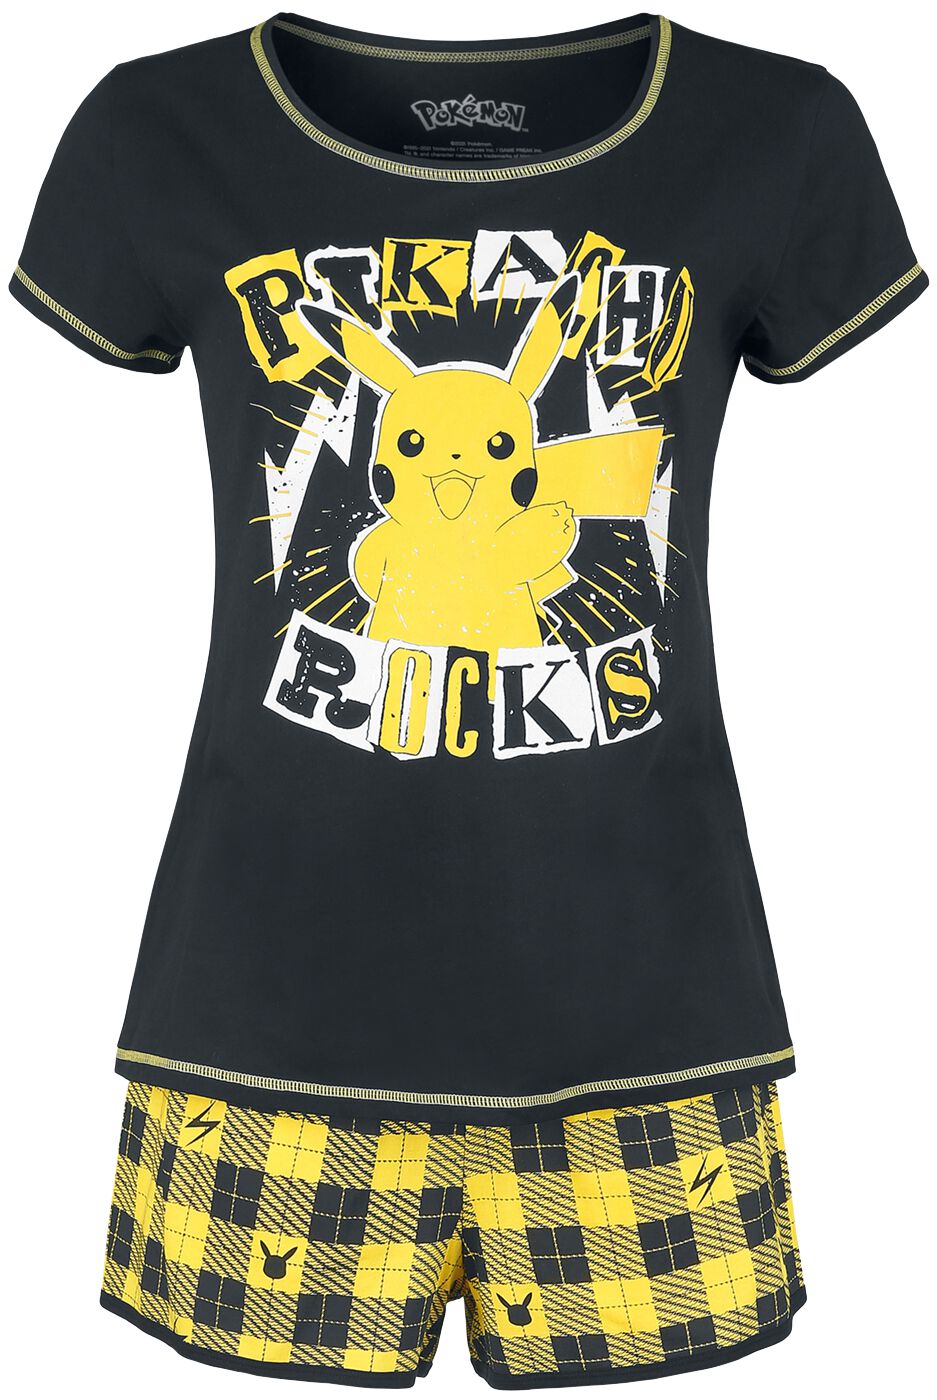 Pyjama Gaming de Pokémon - Pikachu - Rocks - S à XXL - pour Femme - noir/jaune